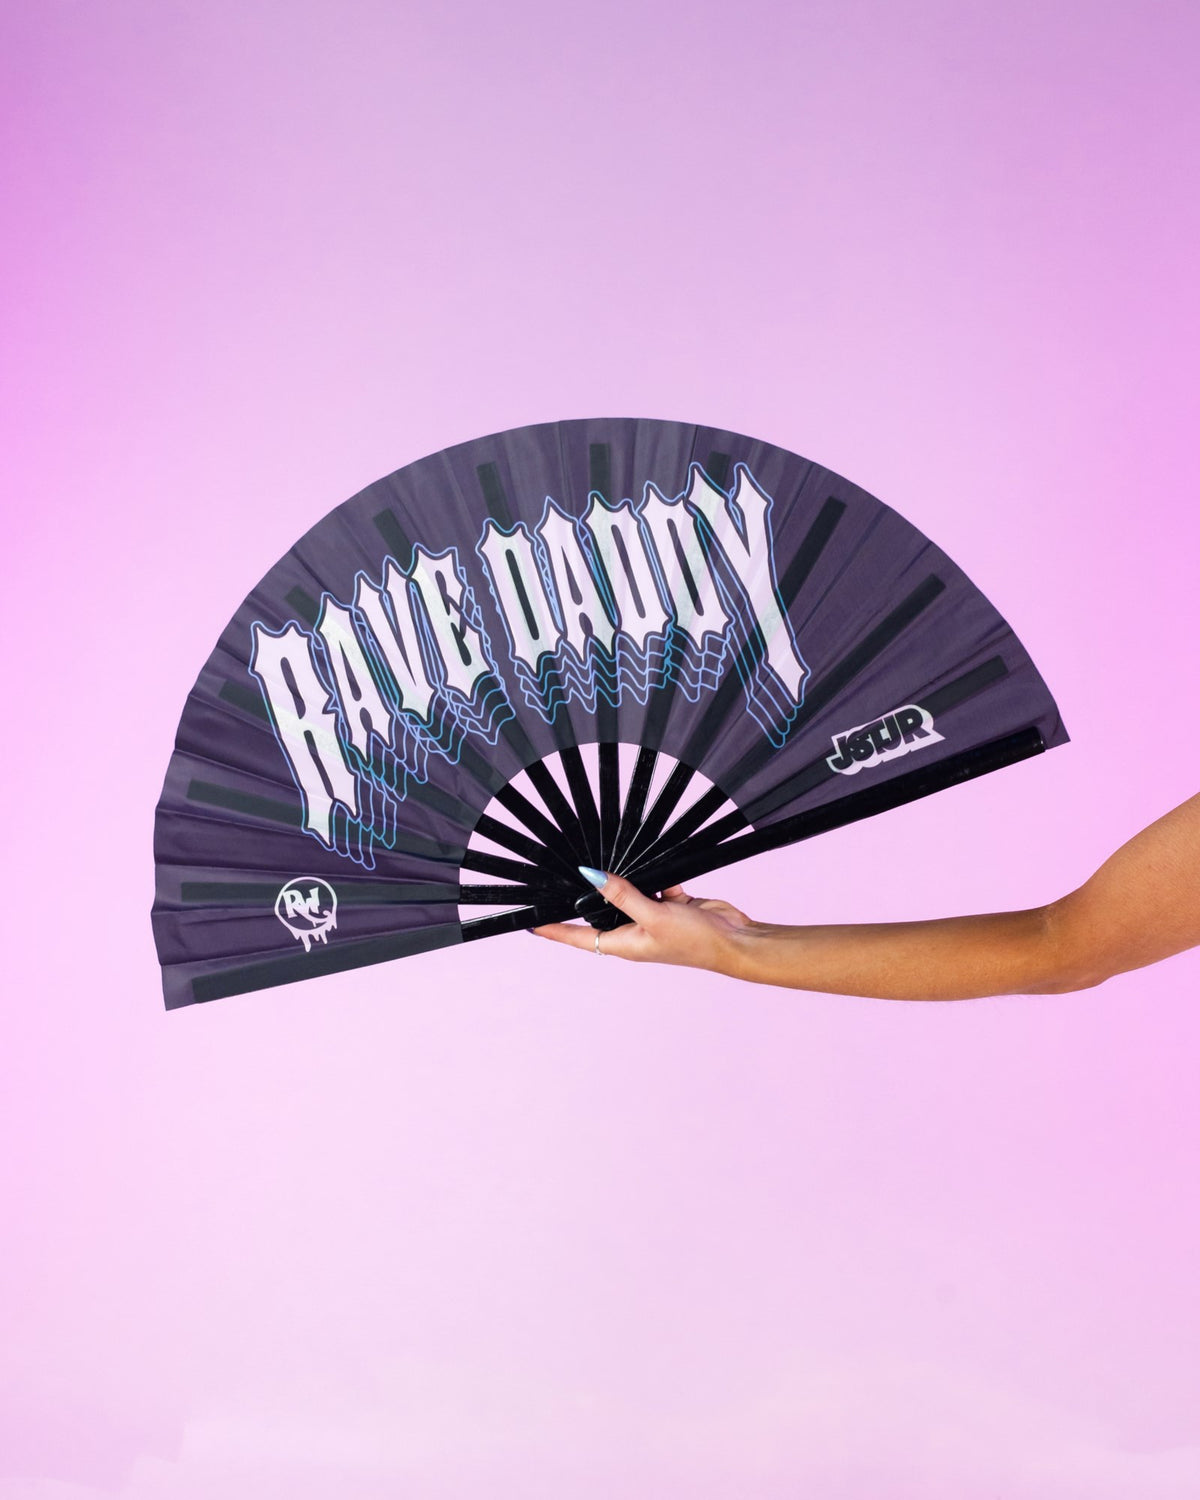 RW x JSTJR Rave Daddy Limited Edition Collab Fan